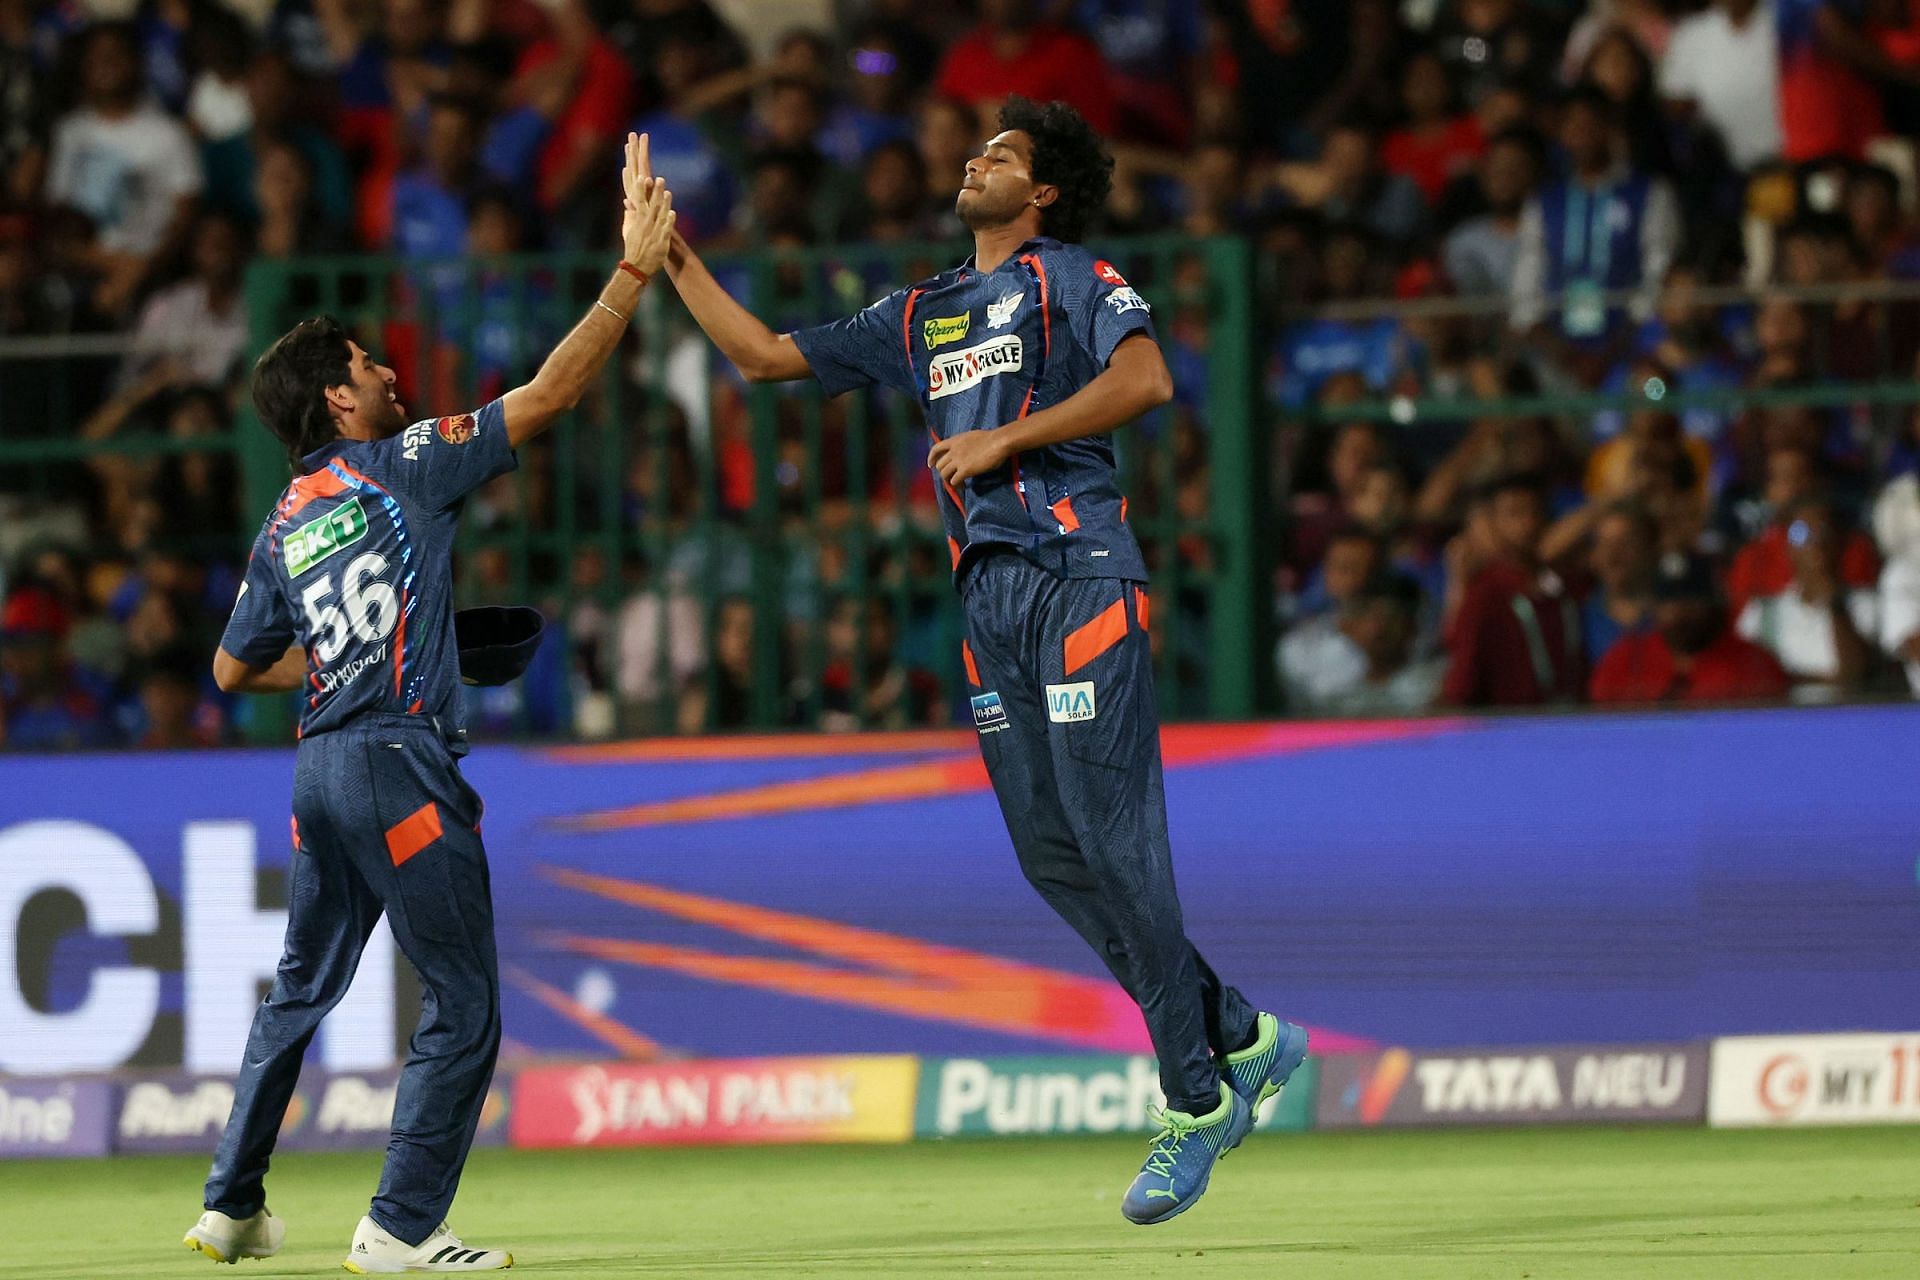 M Siddharth celebrates after dismissing Virat Kohli for his first IPL wicket